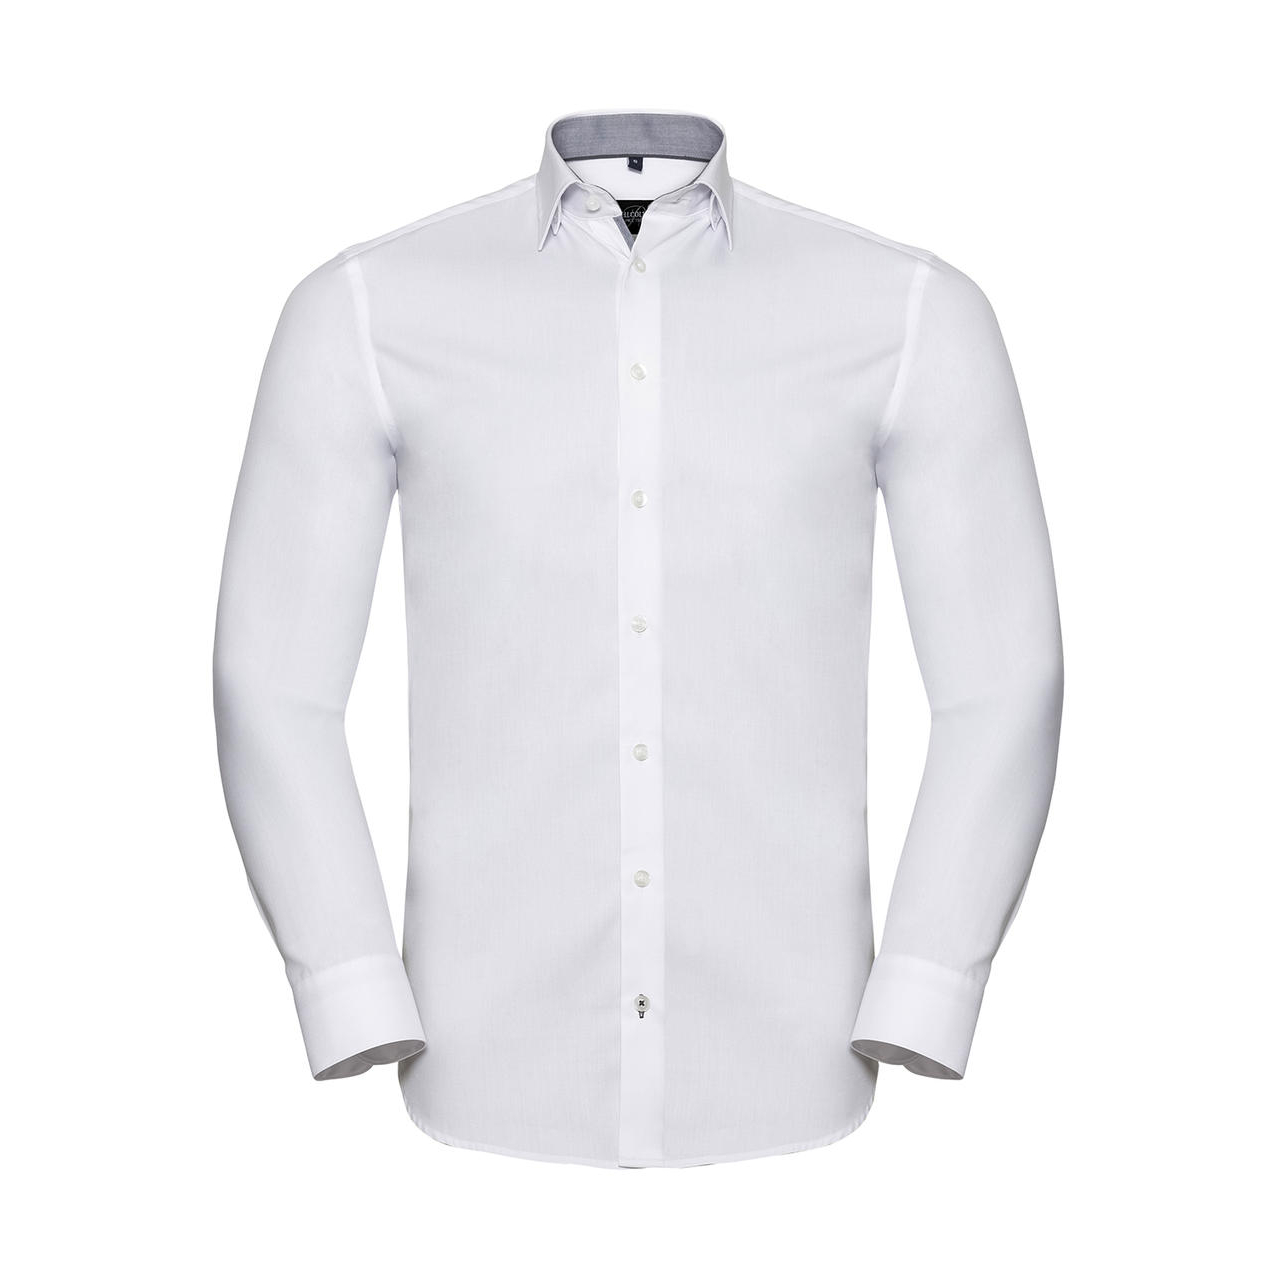 Košile pánská dlouhý rukáv Rusell Tailored Contrast - bílá, XL